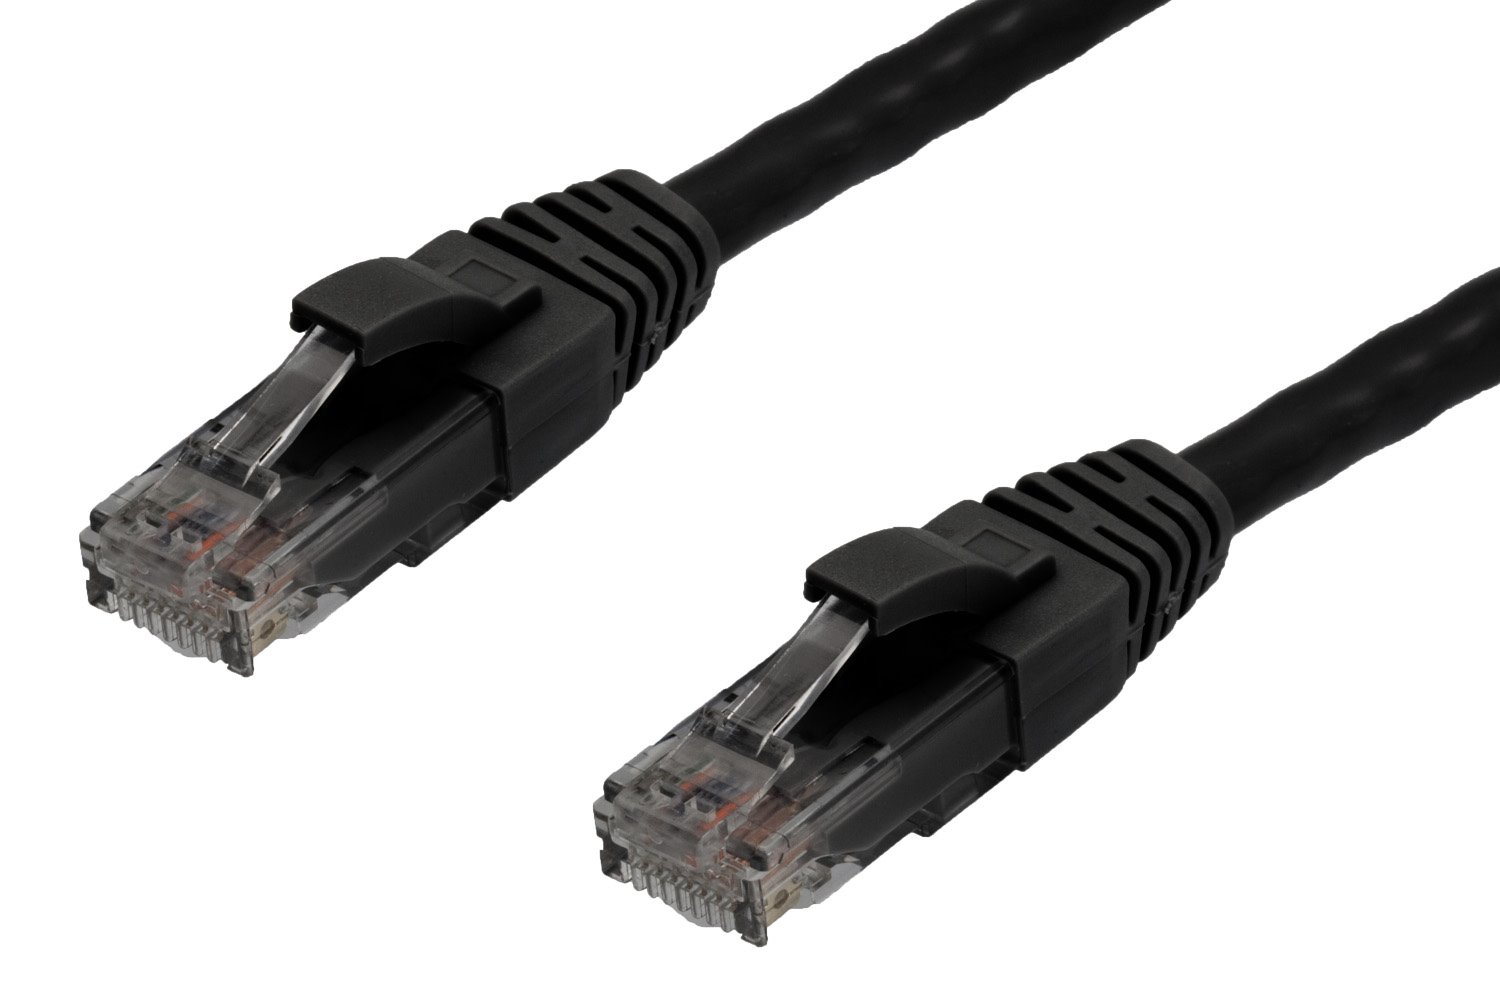 4Cabling 4M RJ45 Cat6 Ethernet Cable. Black